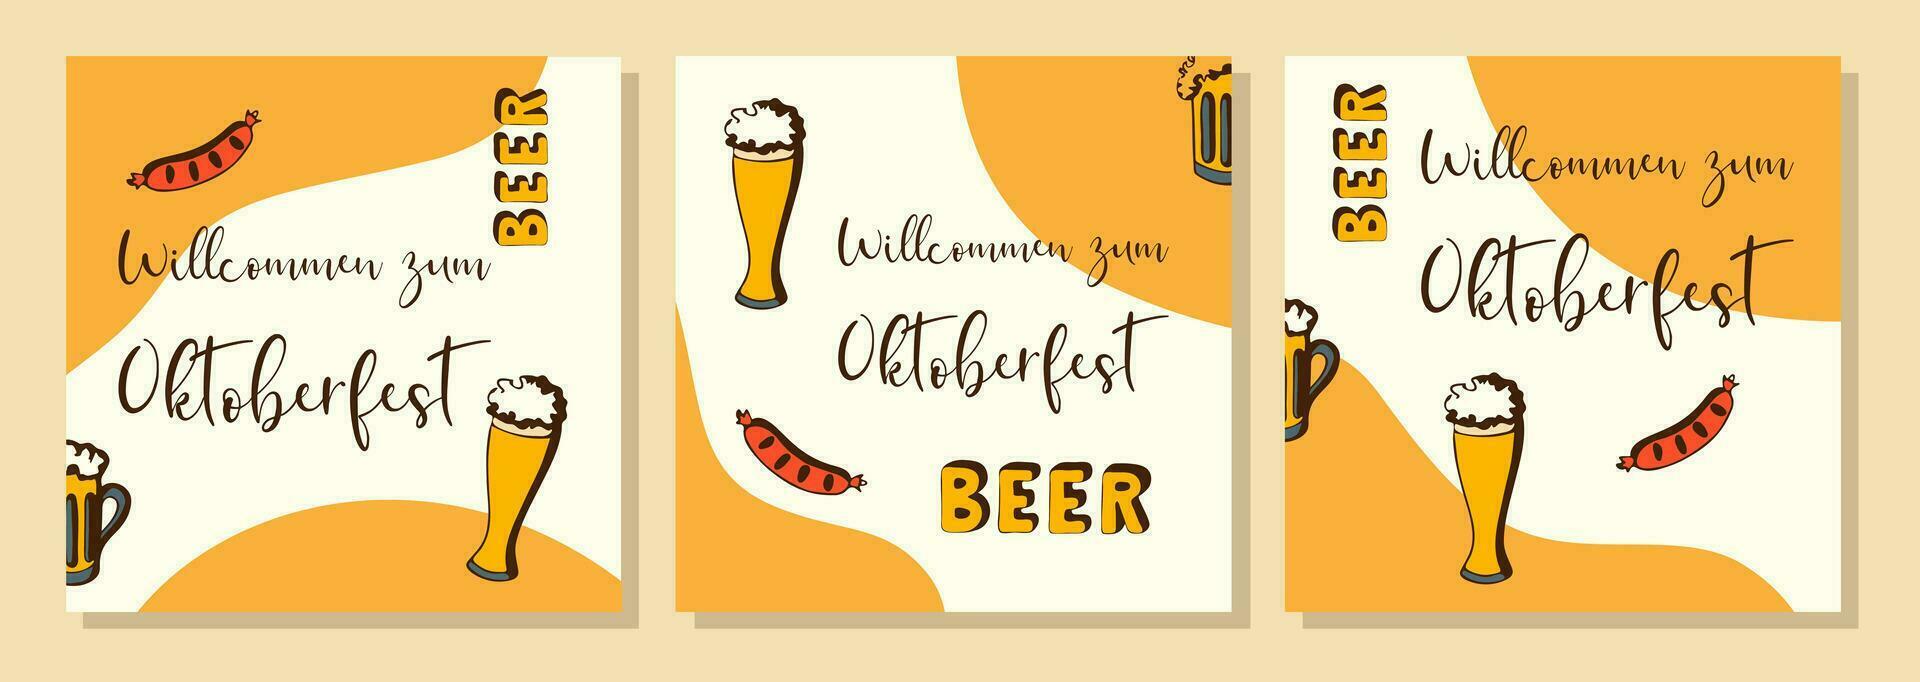 Oktoberfest. Beer festival. Orange posters set with doodle hand drawn and inscription Willcommen zum Oktoberfest. vector